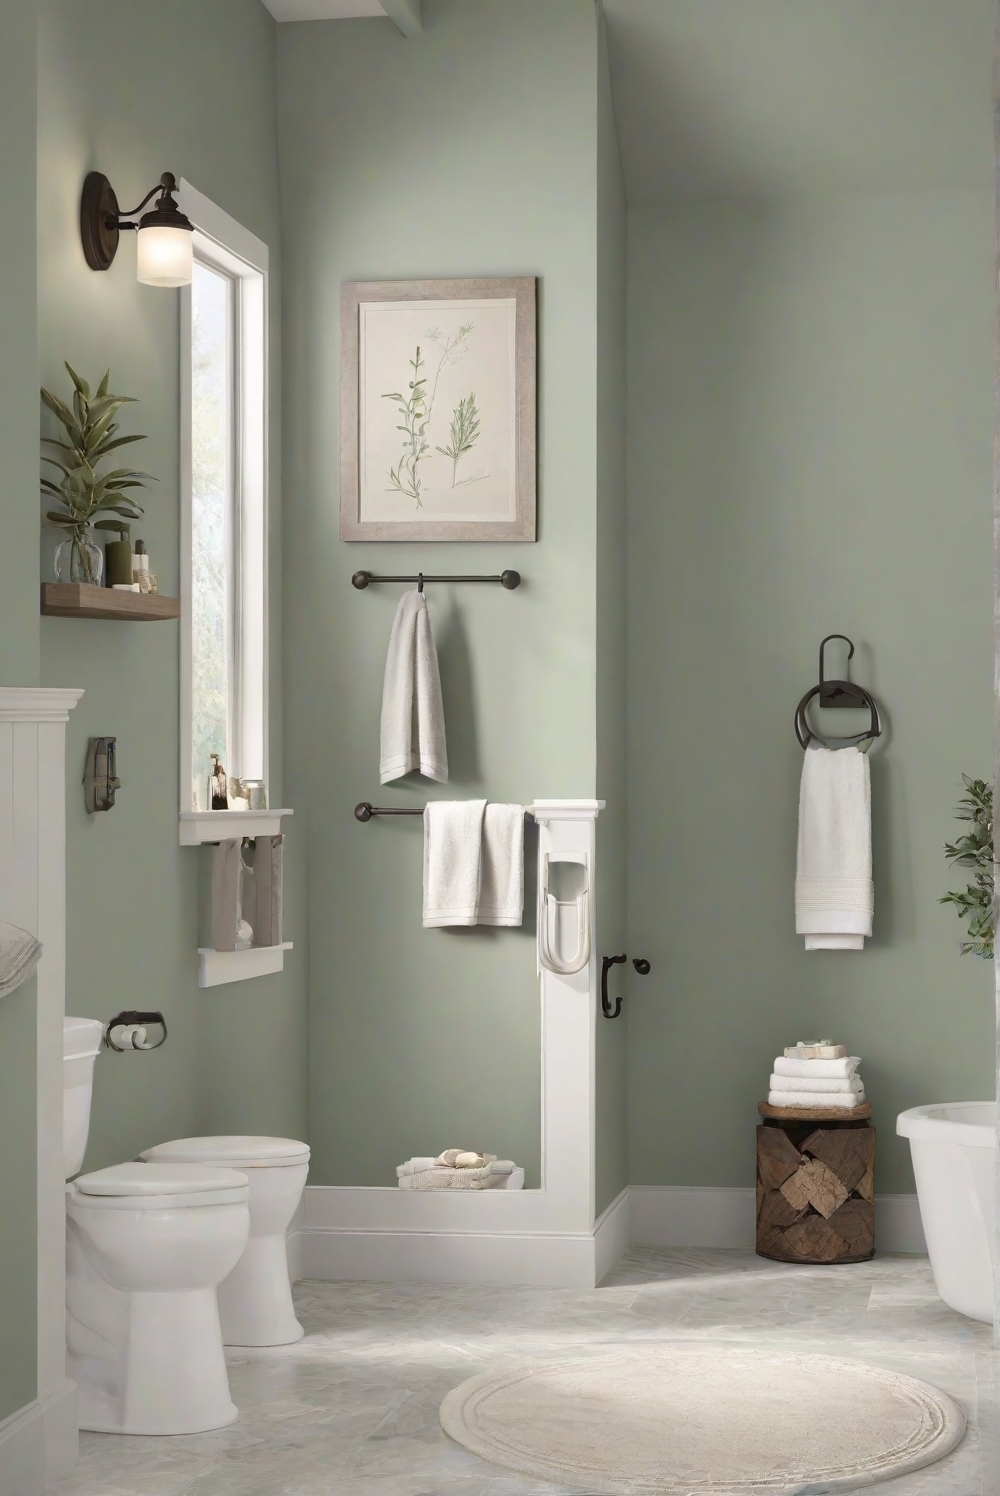 - bathroom renovation - bathroom design inspiration - interior design ideas - natural harmony decor - green bathroom decor - sagebrush green paint - BM 2141-30 color harmony